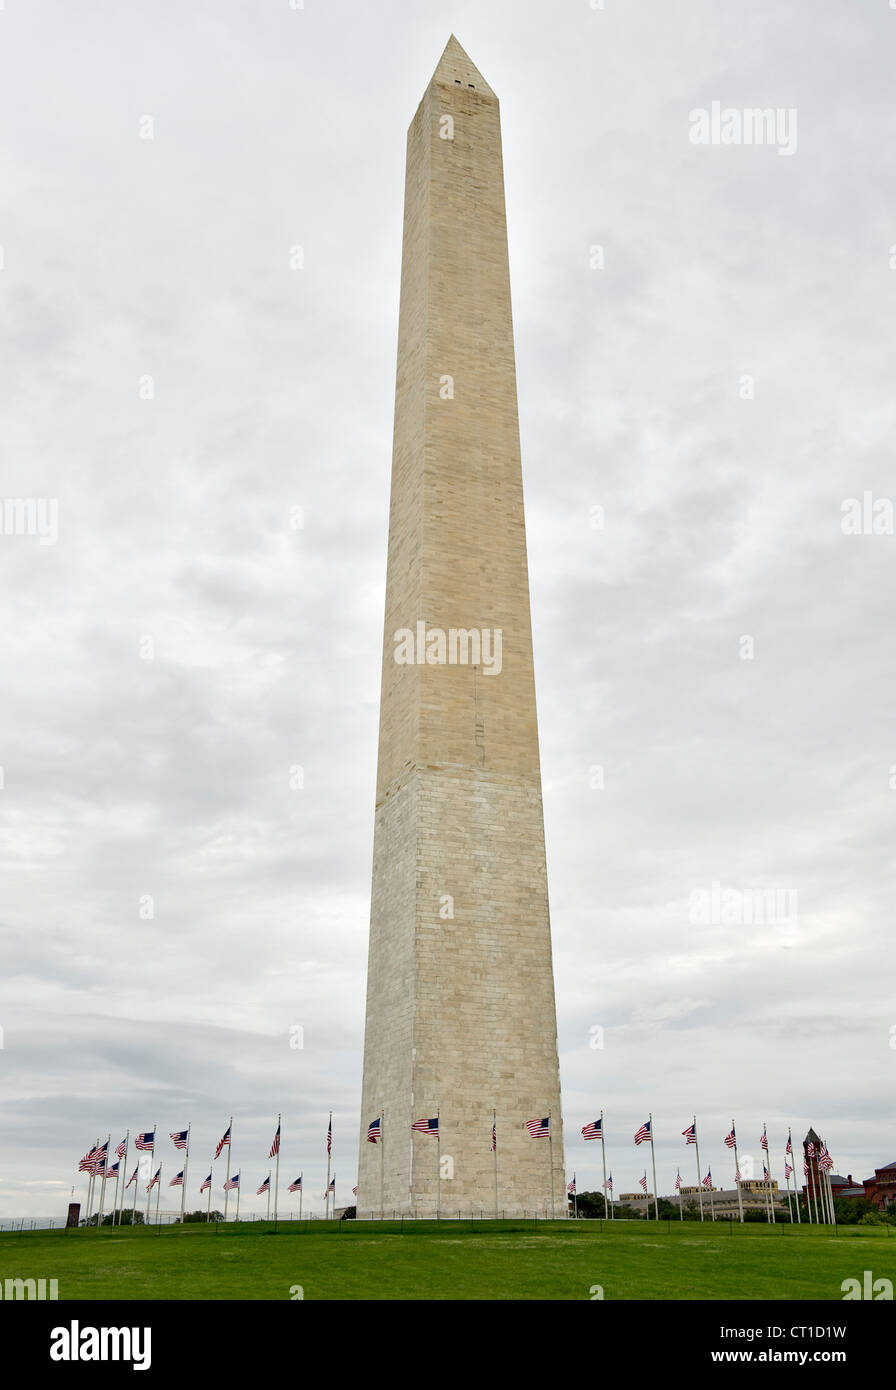 The Washington Monument in Washington DC, USA. Stock Photo